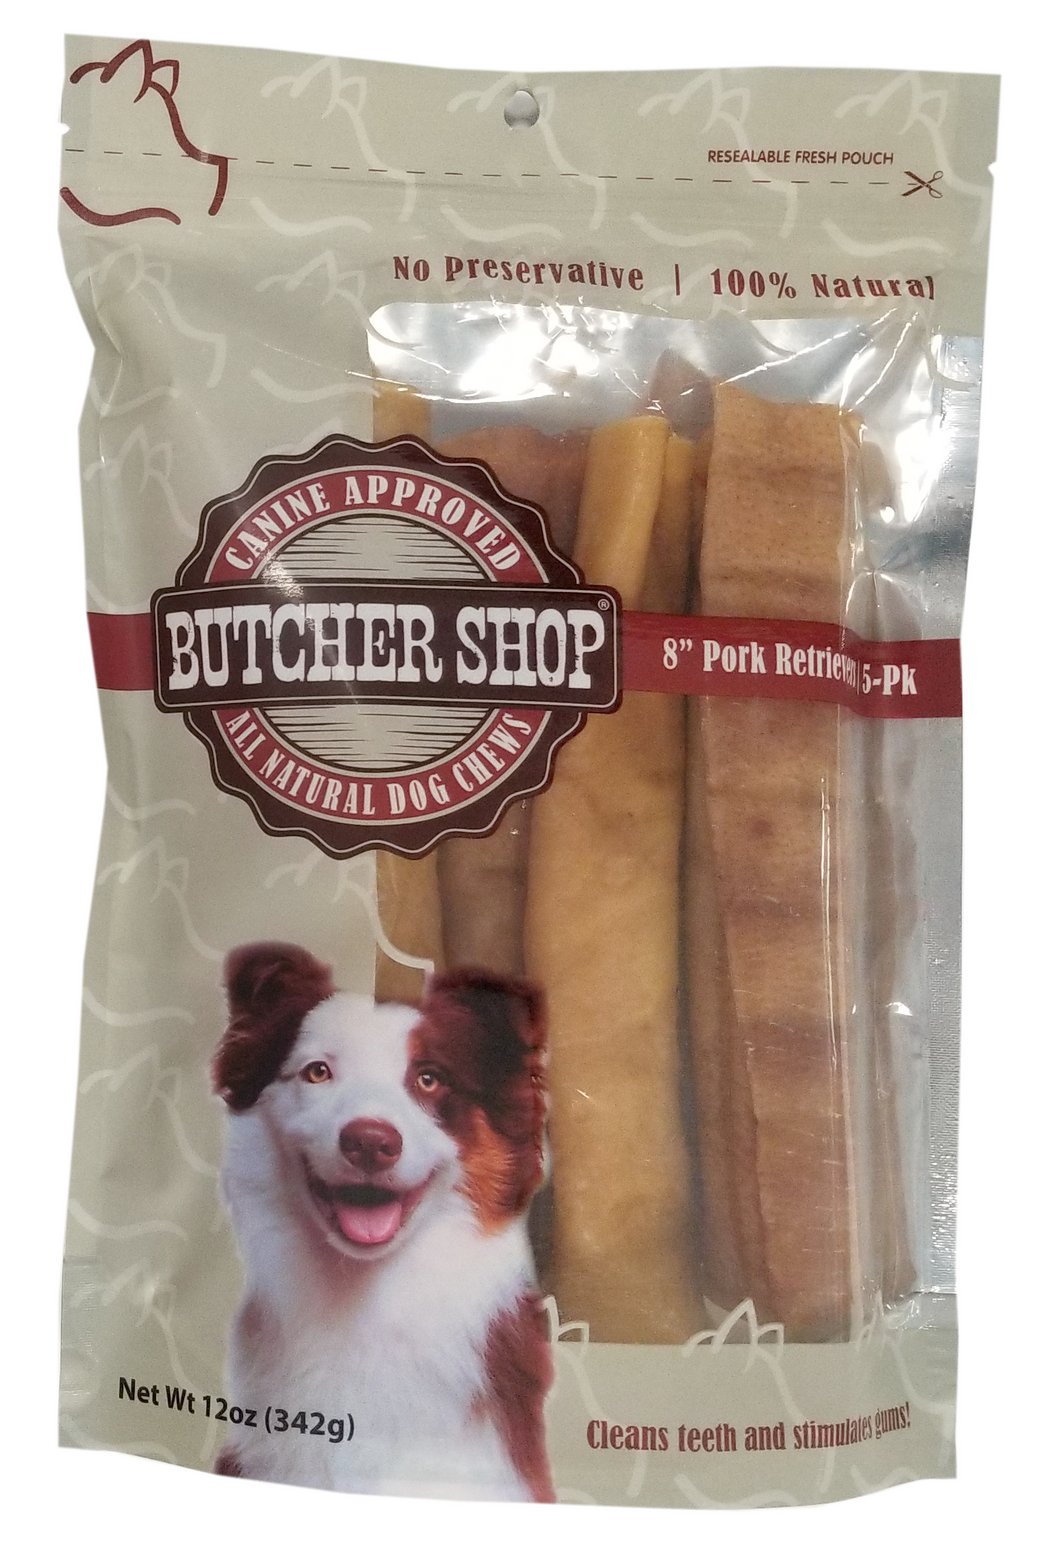 Butcher Shop 8'' Inch Pork Retrievers, 5-Pk